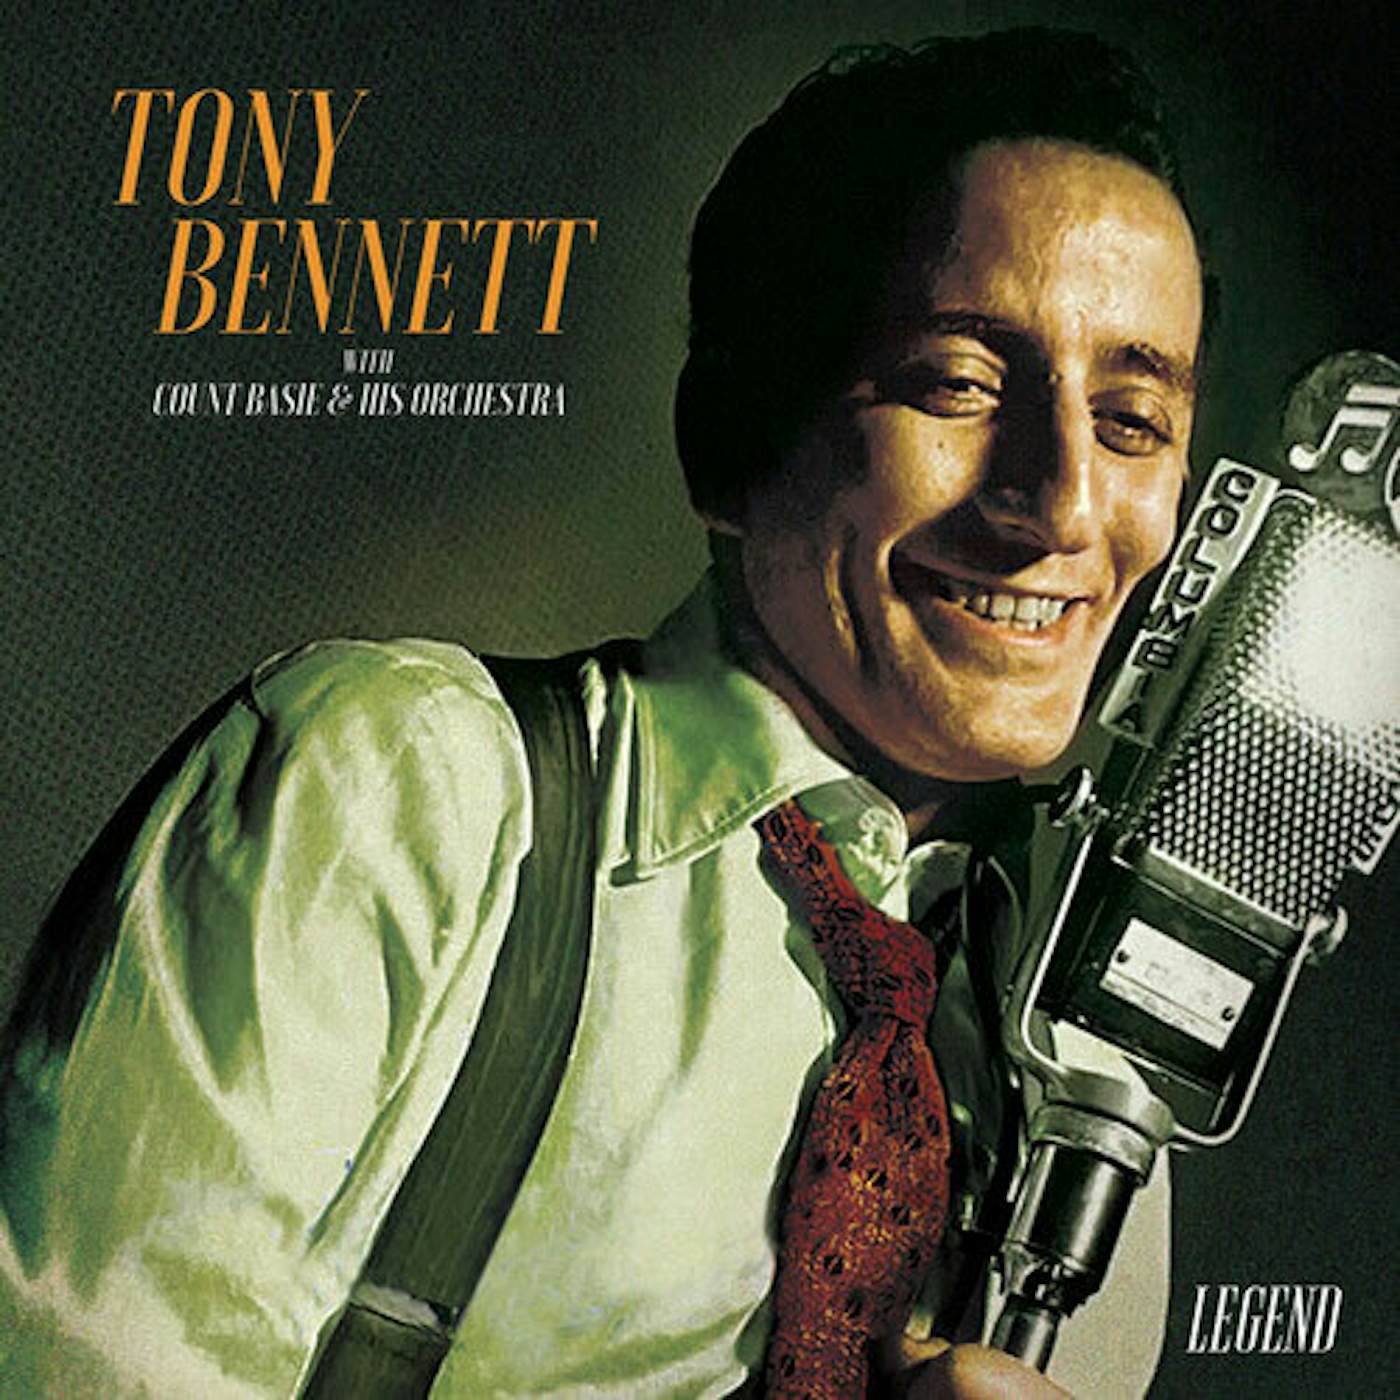 Tony Bennett & The Count Basie Orchestra LEGEND (GOLD VINYL) Vinyl Record